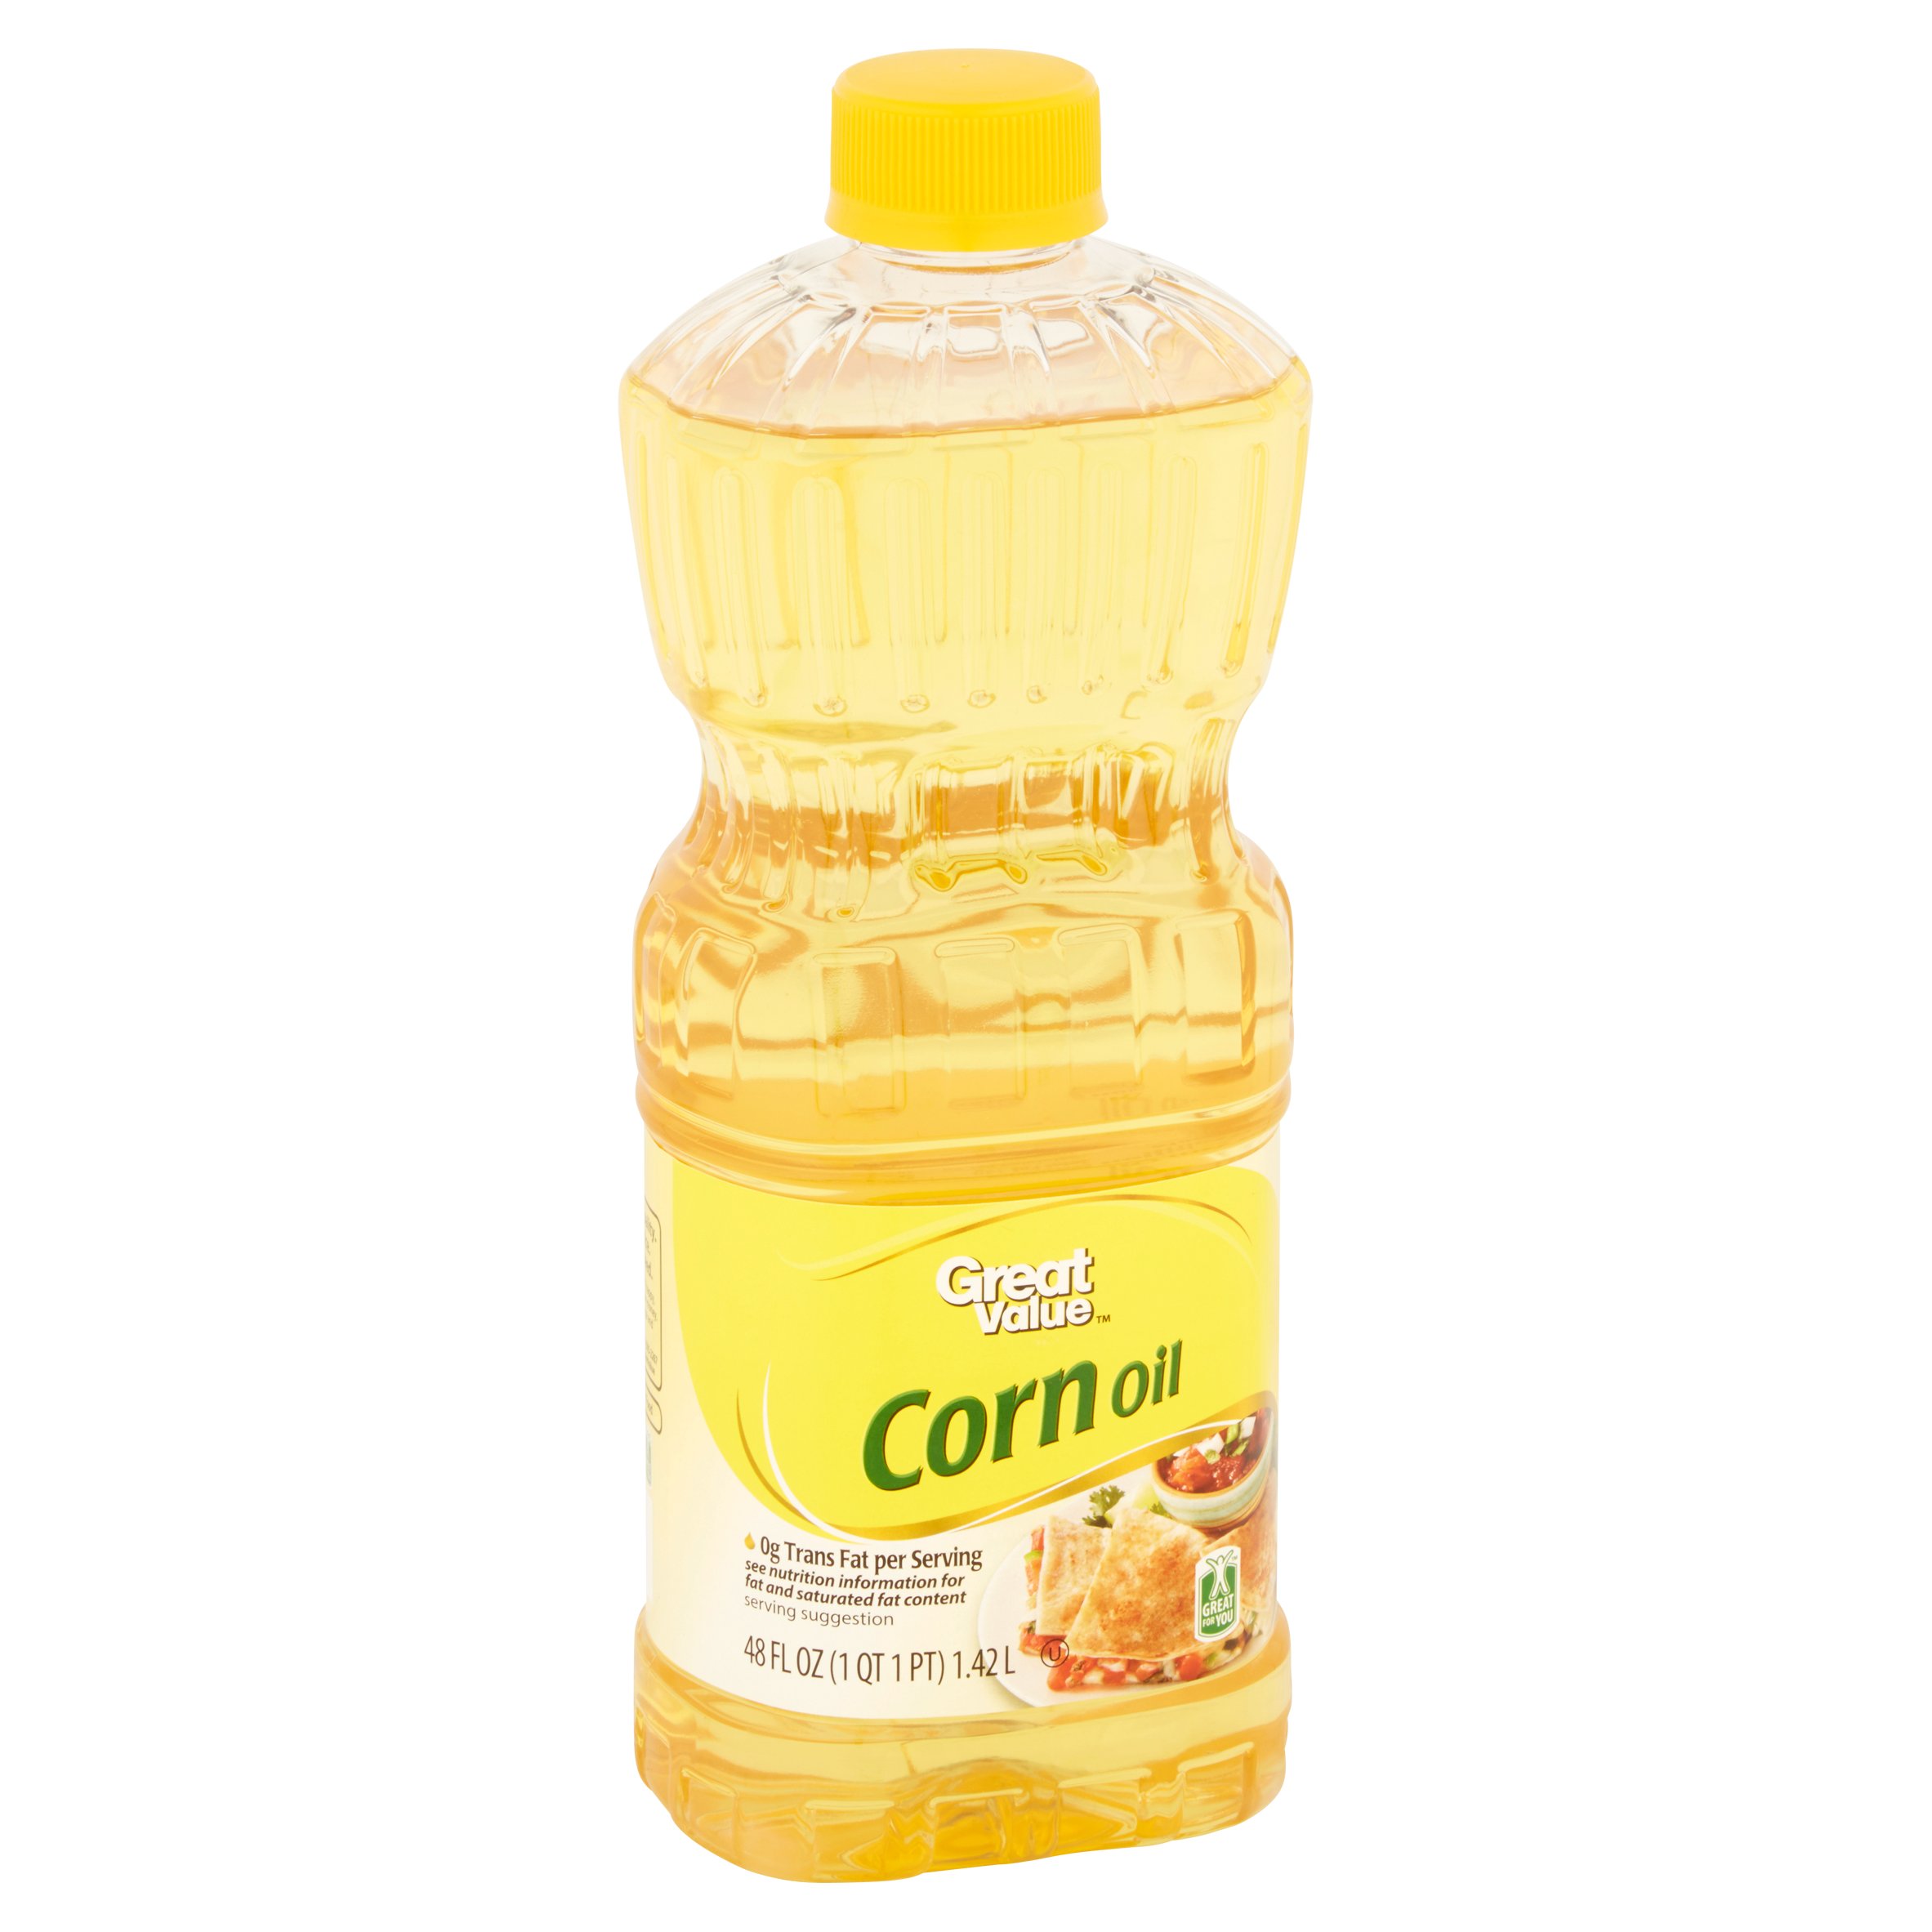 Great Value Corn Oil, 48 Oz, 3 Pack Image